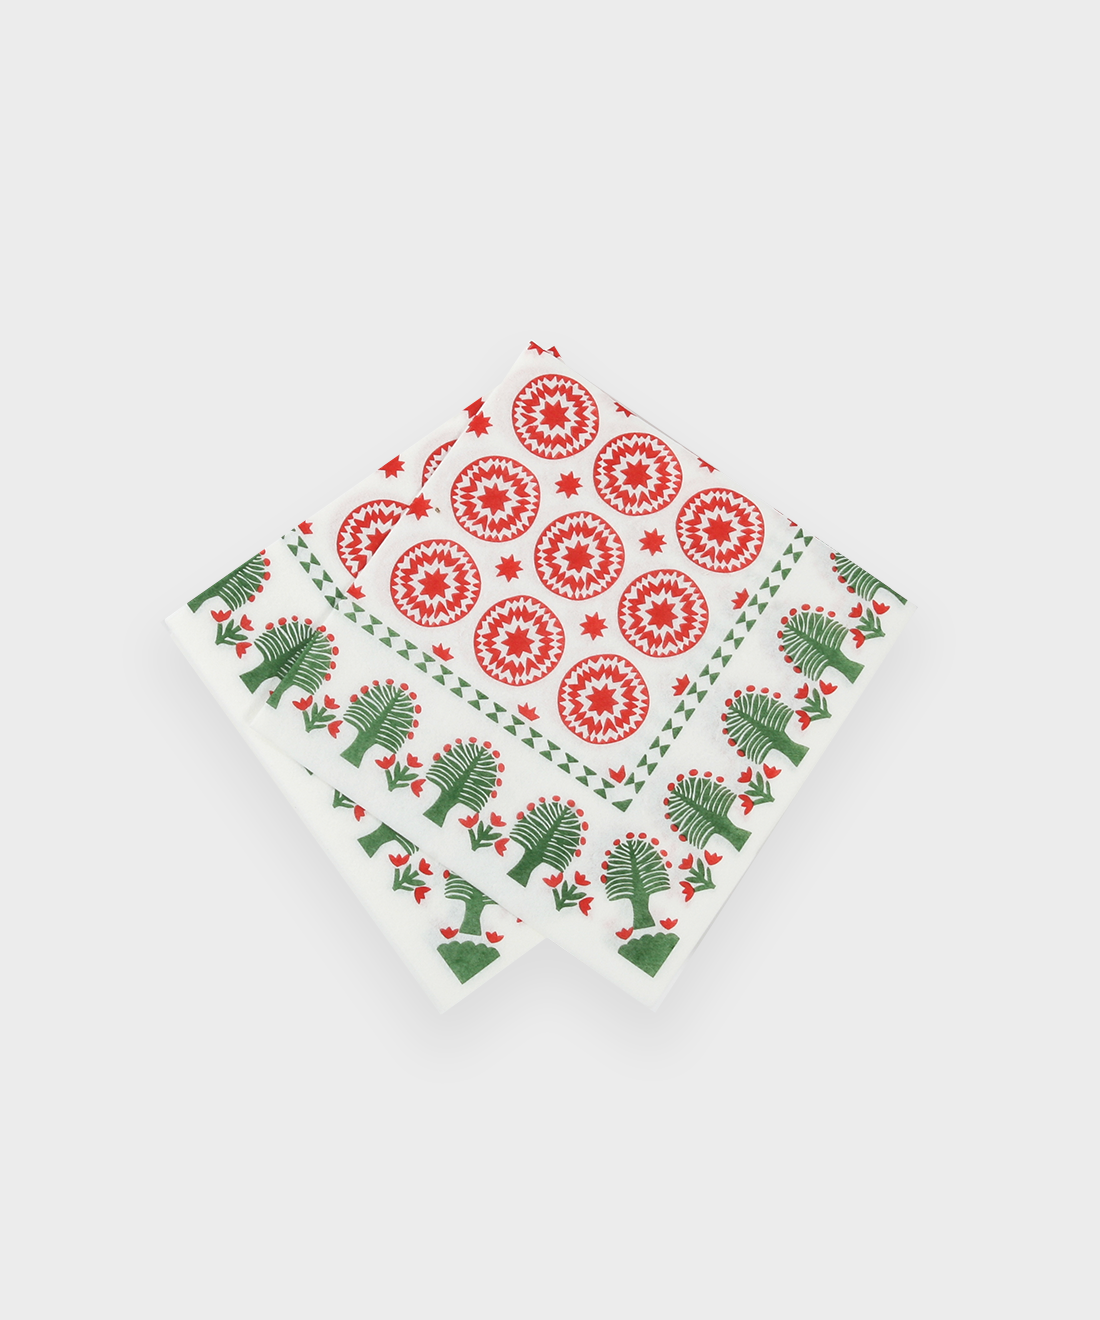 Printed Paper Napkins in Christmas Motif